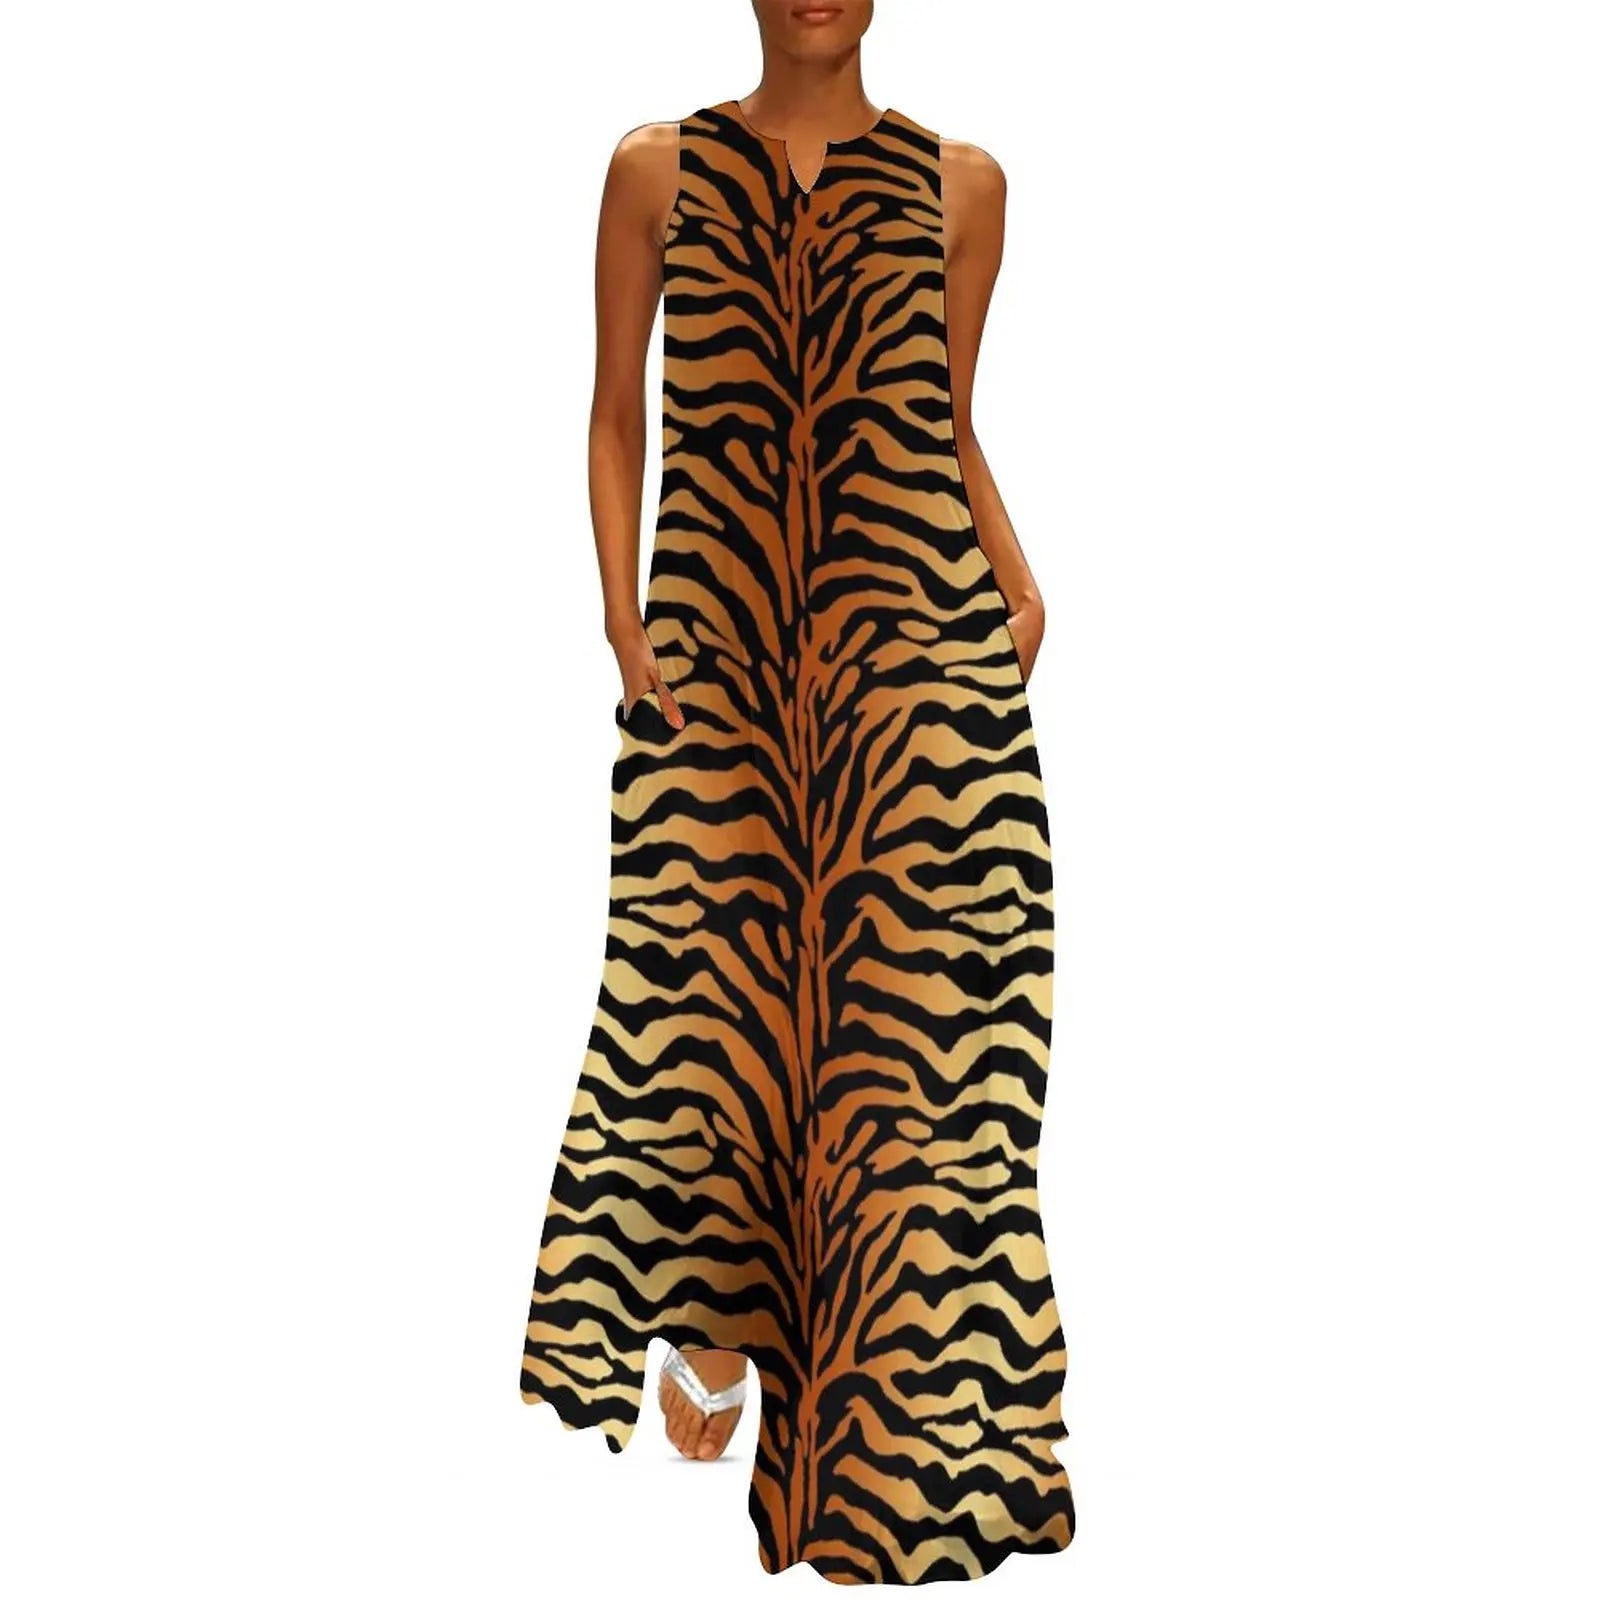 New Arrival Gorgeous Classy Luxury Women's Leopard Fashion Dress